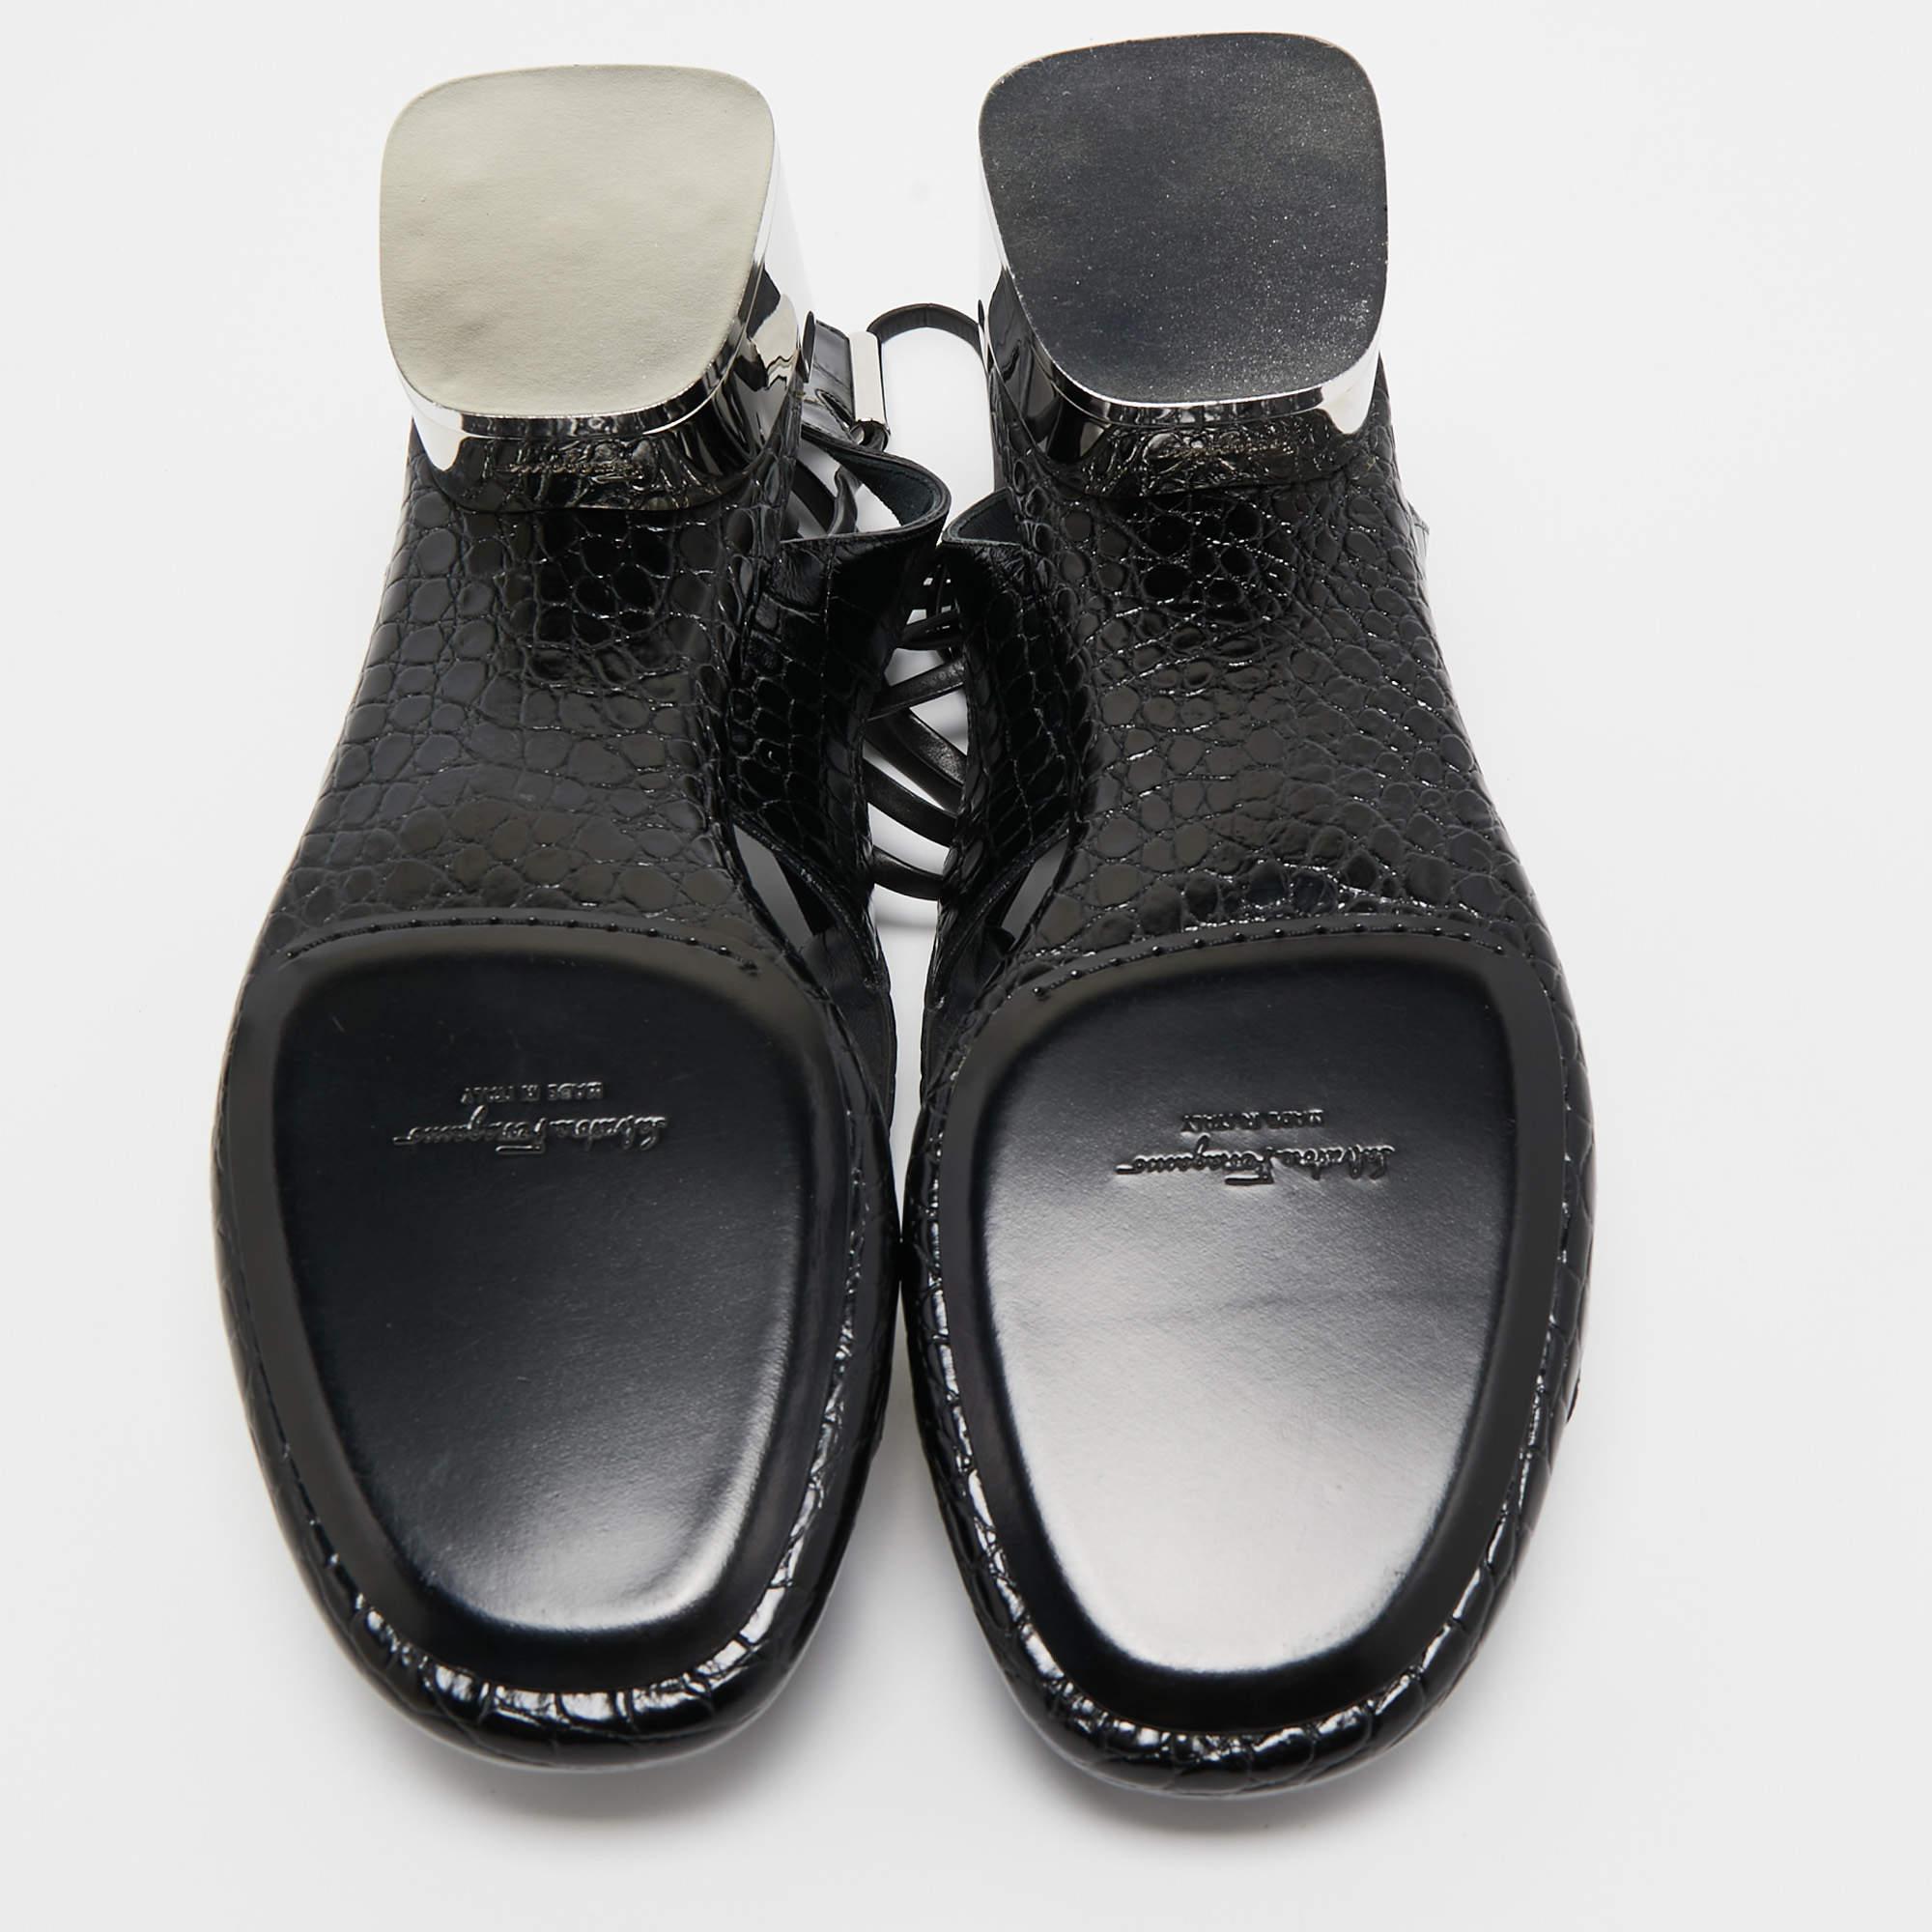 Salvatore Ferragamo Croc Embossed Leather Glorja Ankle Wrap Sandals Size 39 For Sale 4